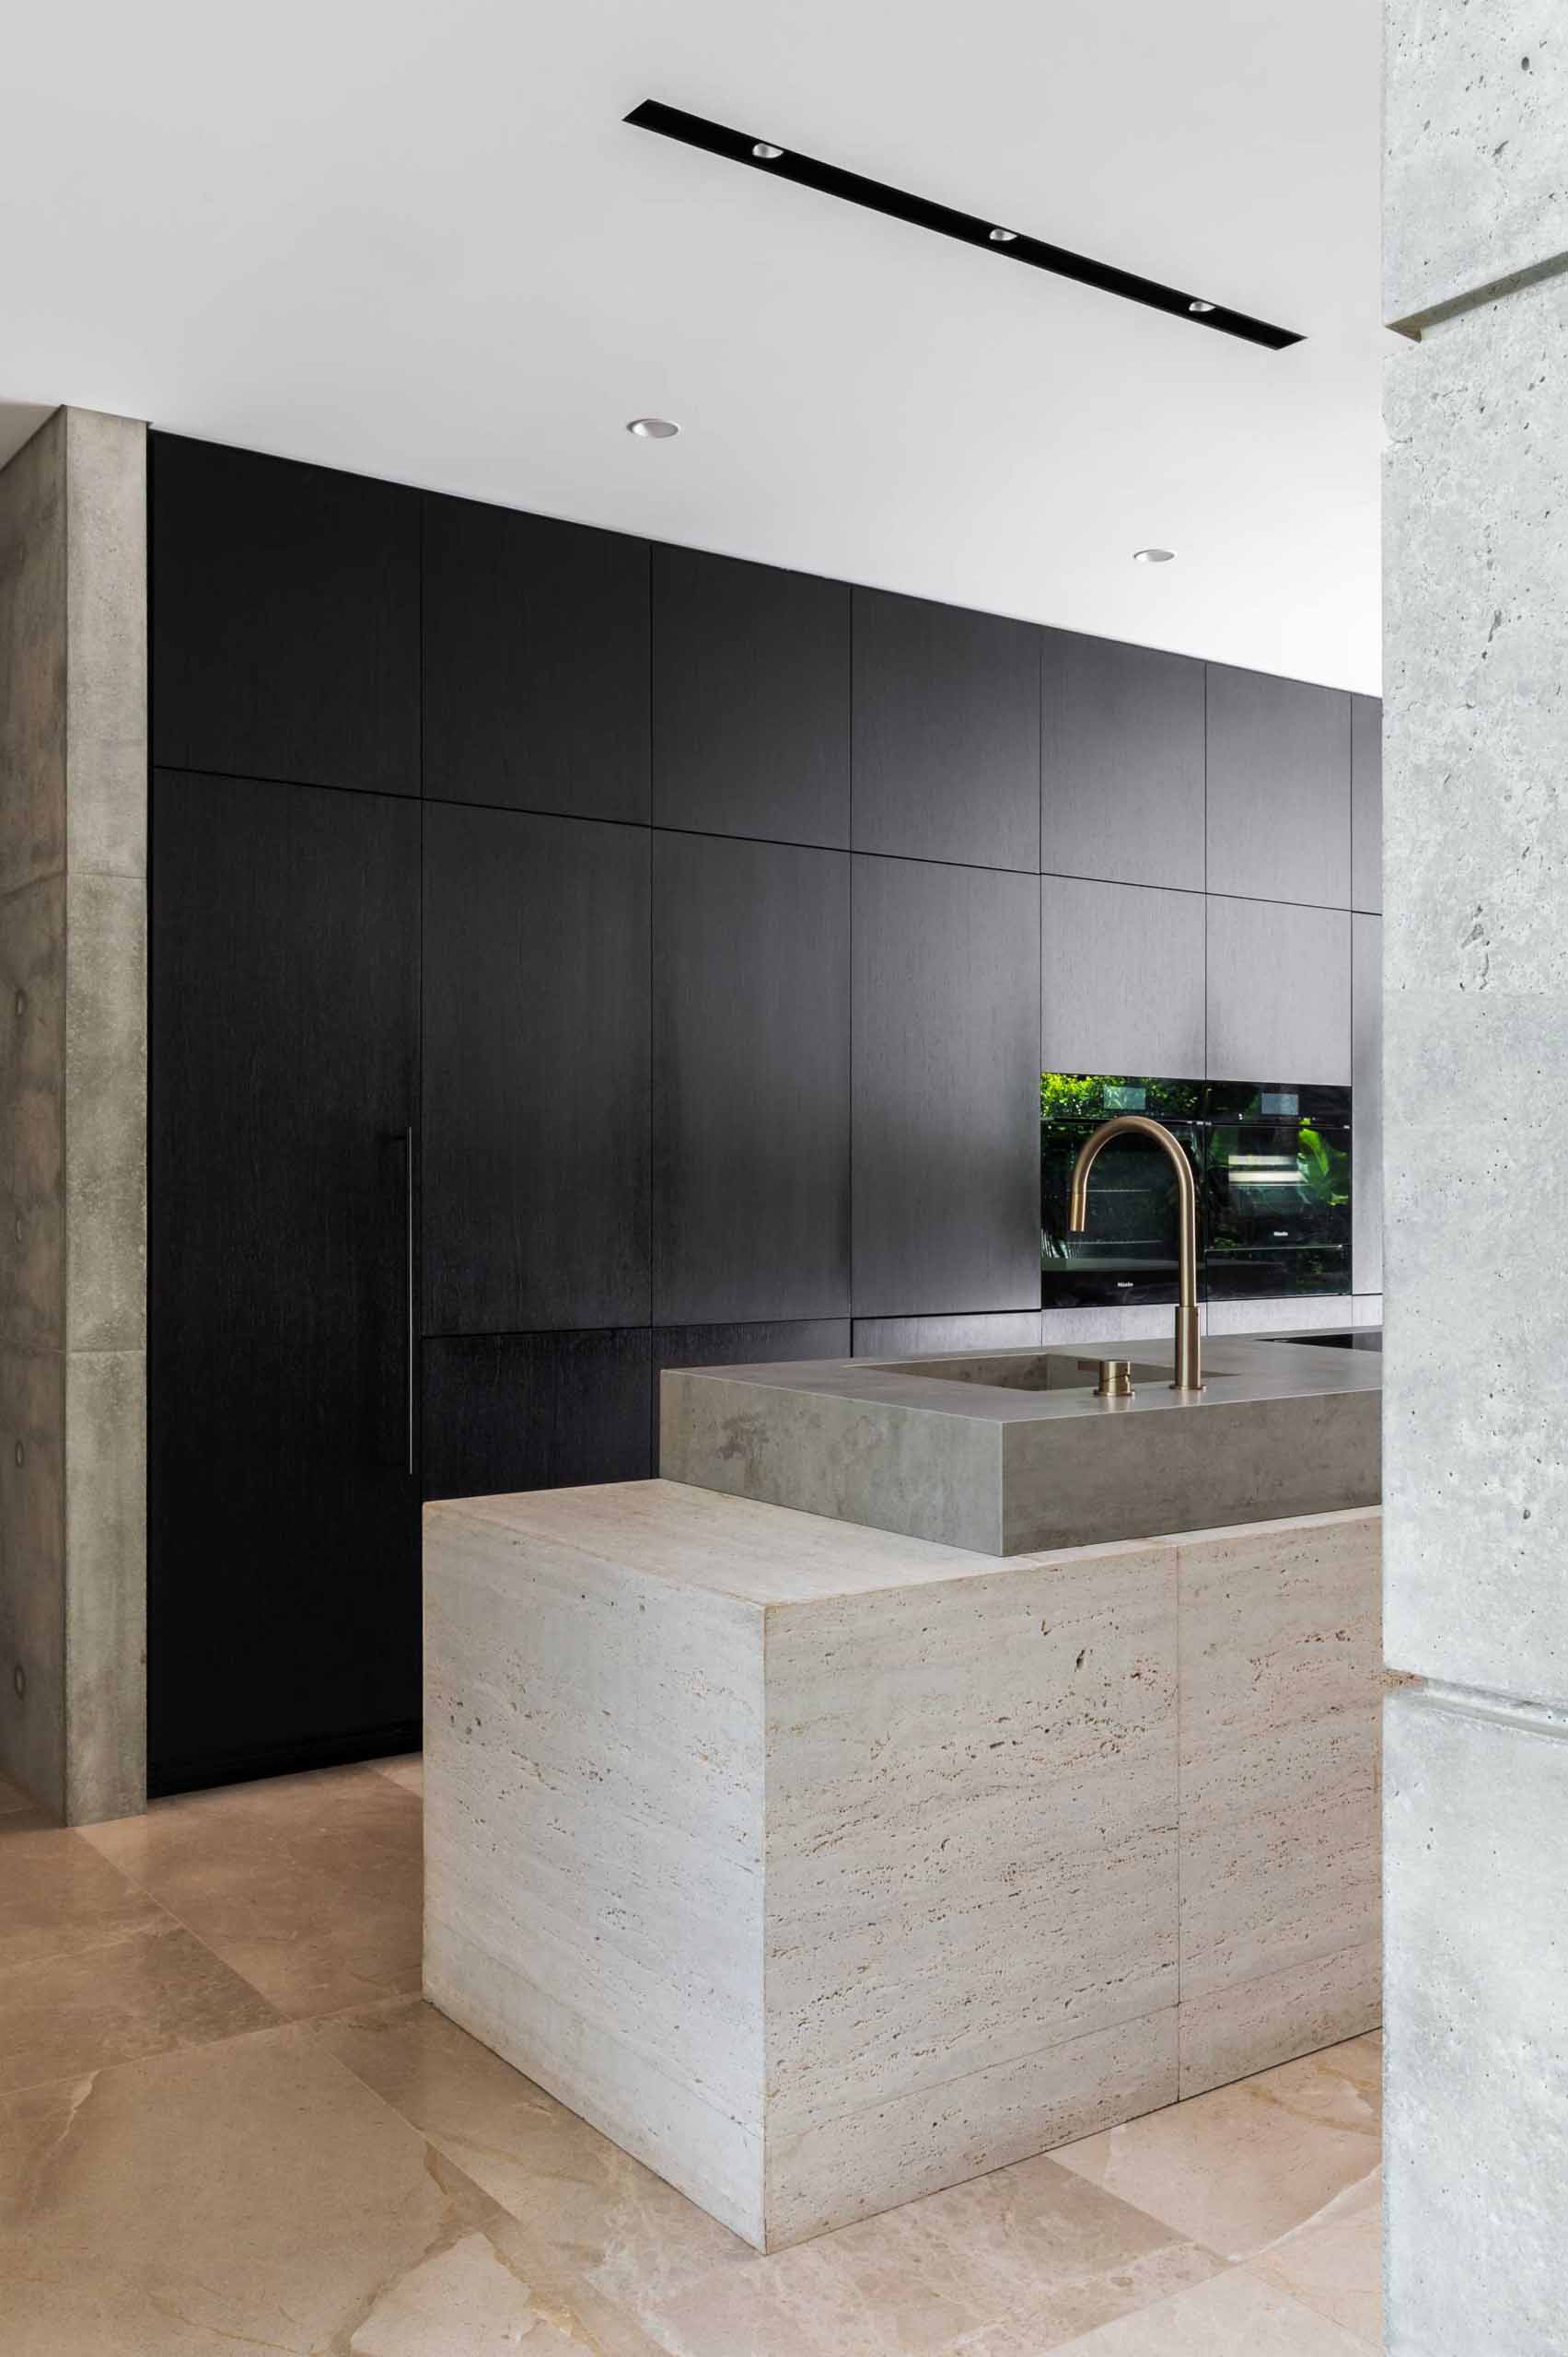 This minimalist kitchen features concrete walls, limestone tiled floors, sandblasted travertine wall cladding, and minimalist black cabinets